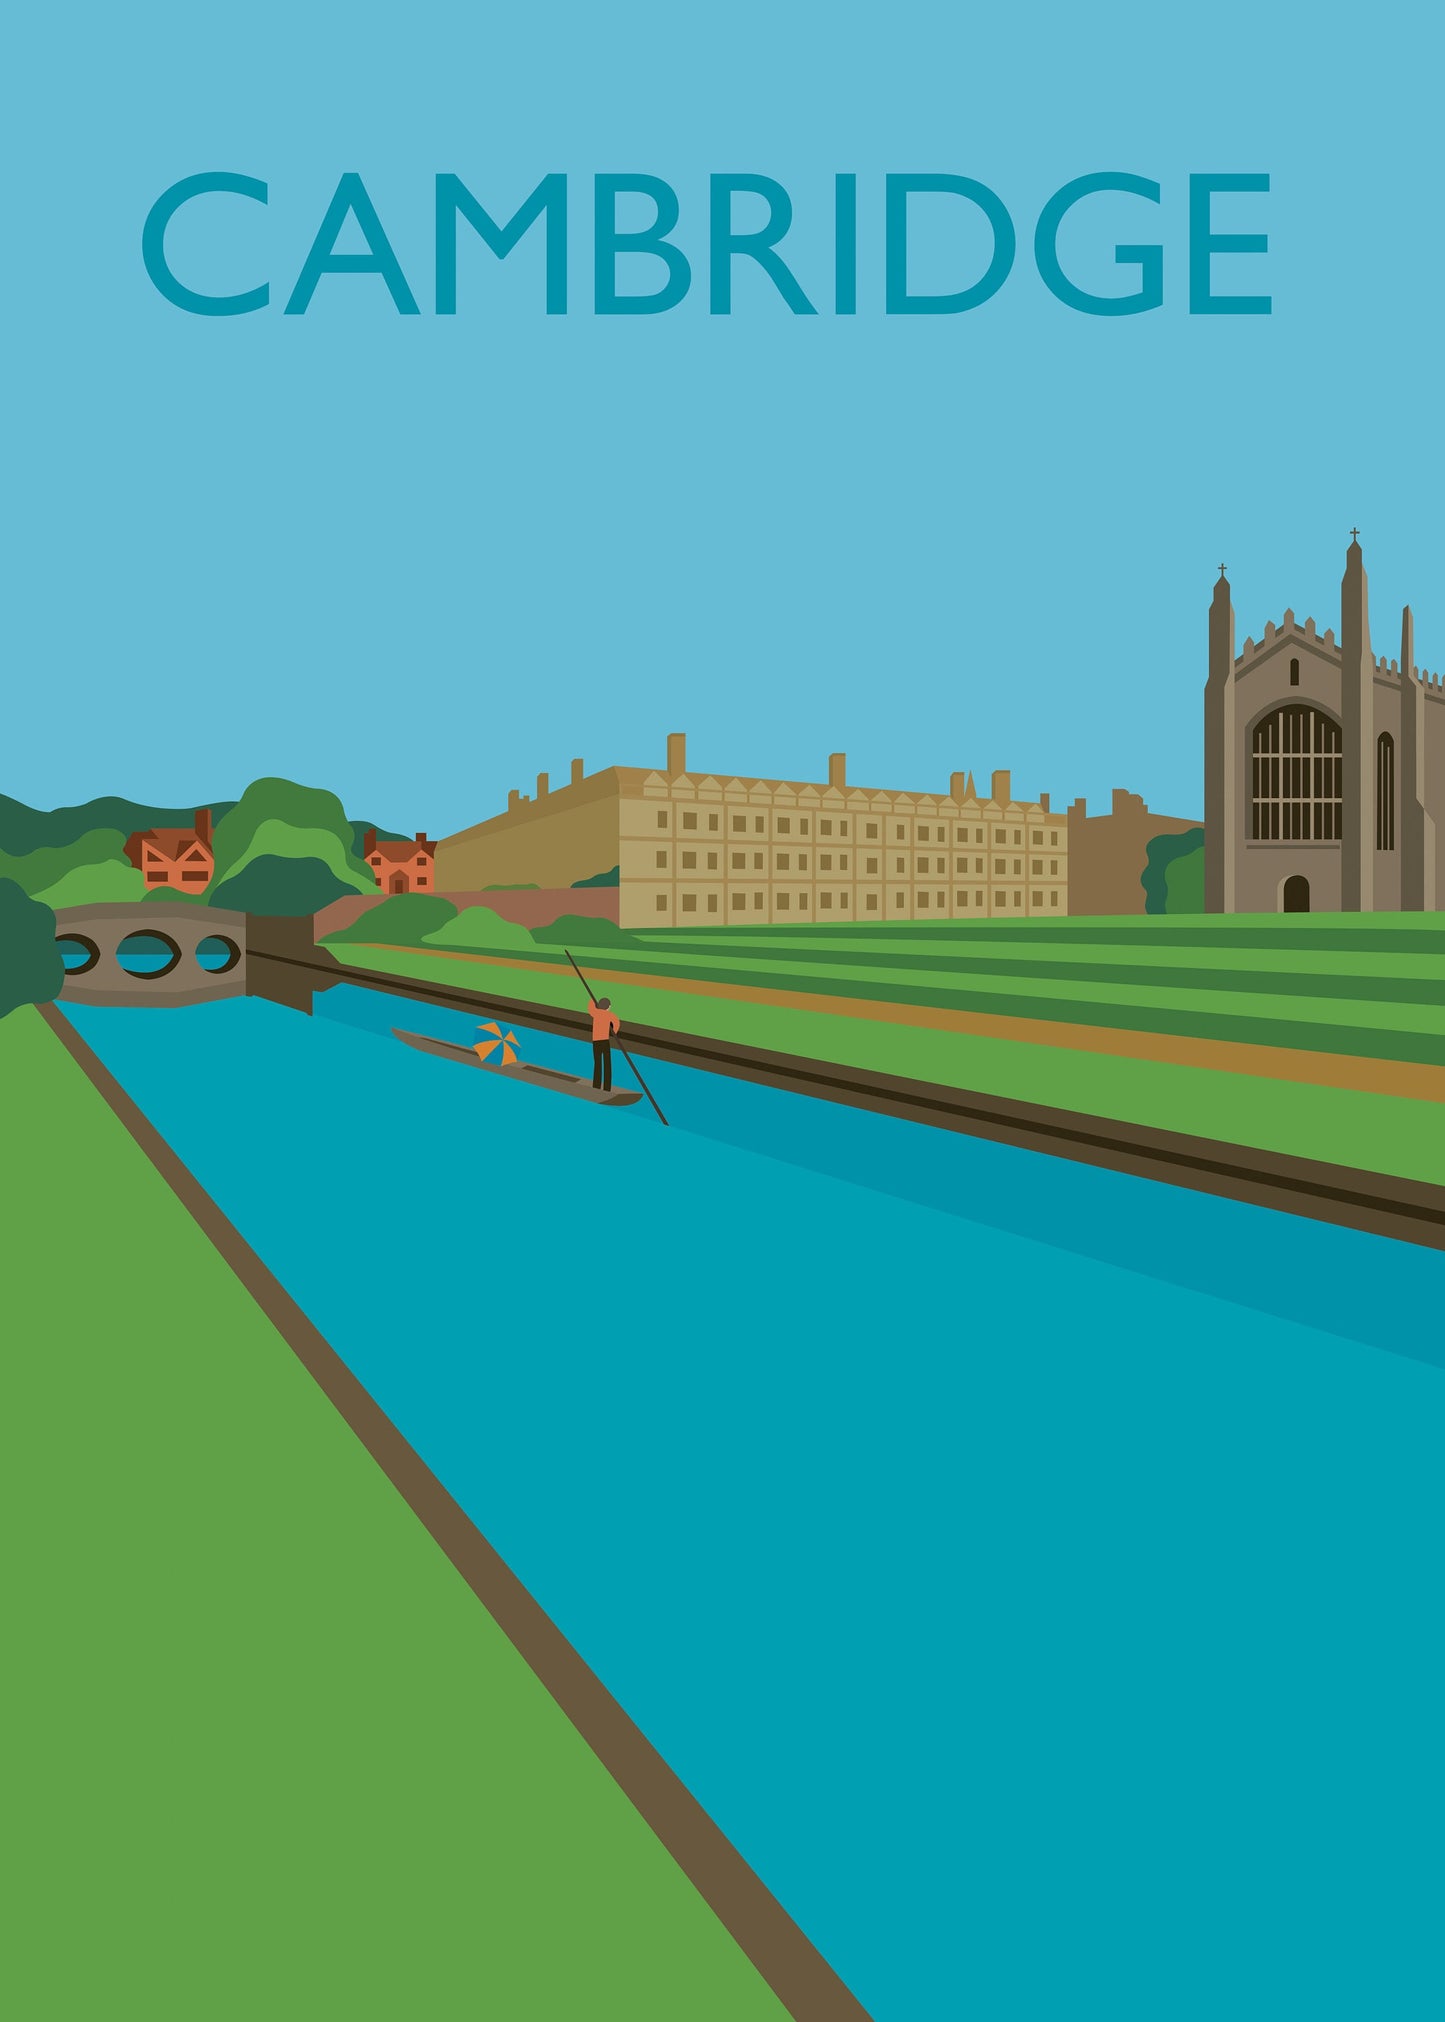 Cambridge Travel Poster Print